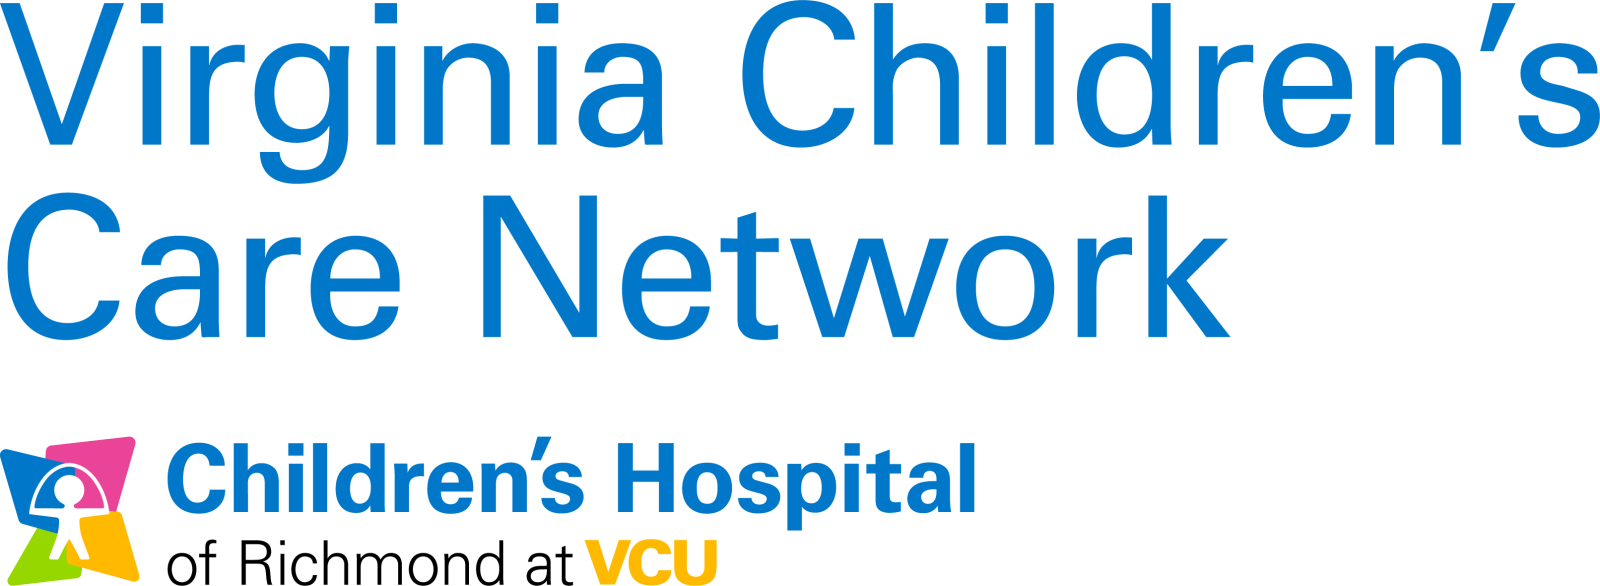 Virginia Children's Care Network logo